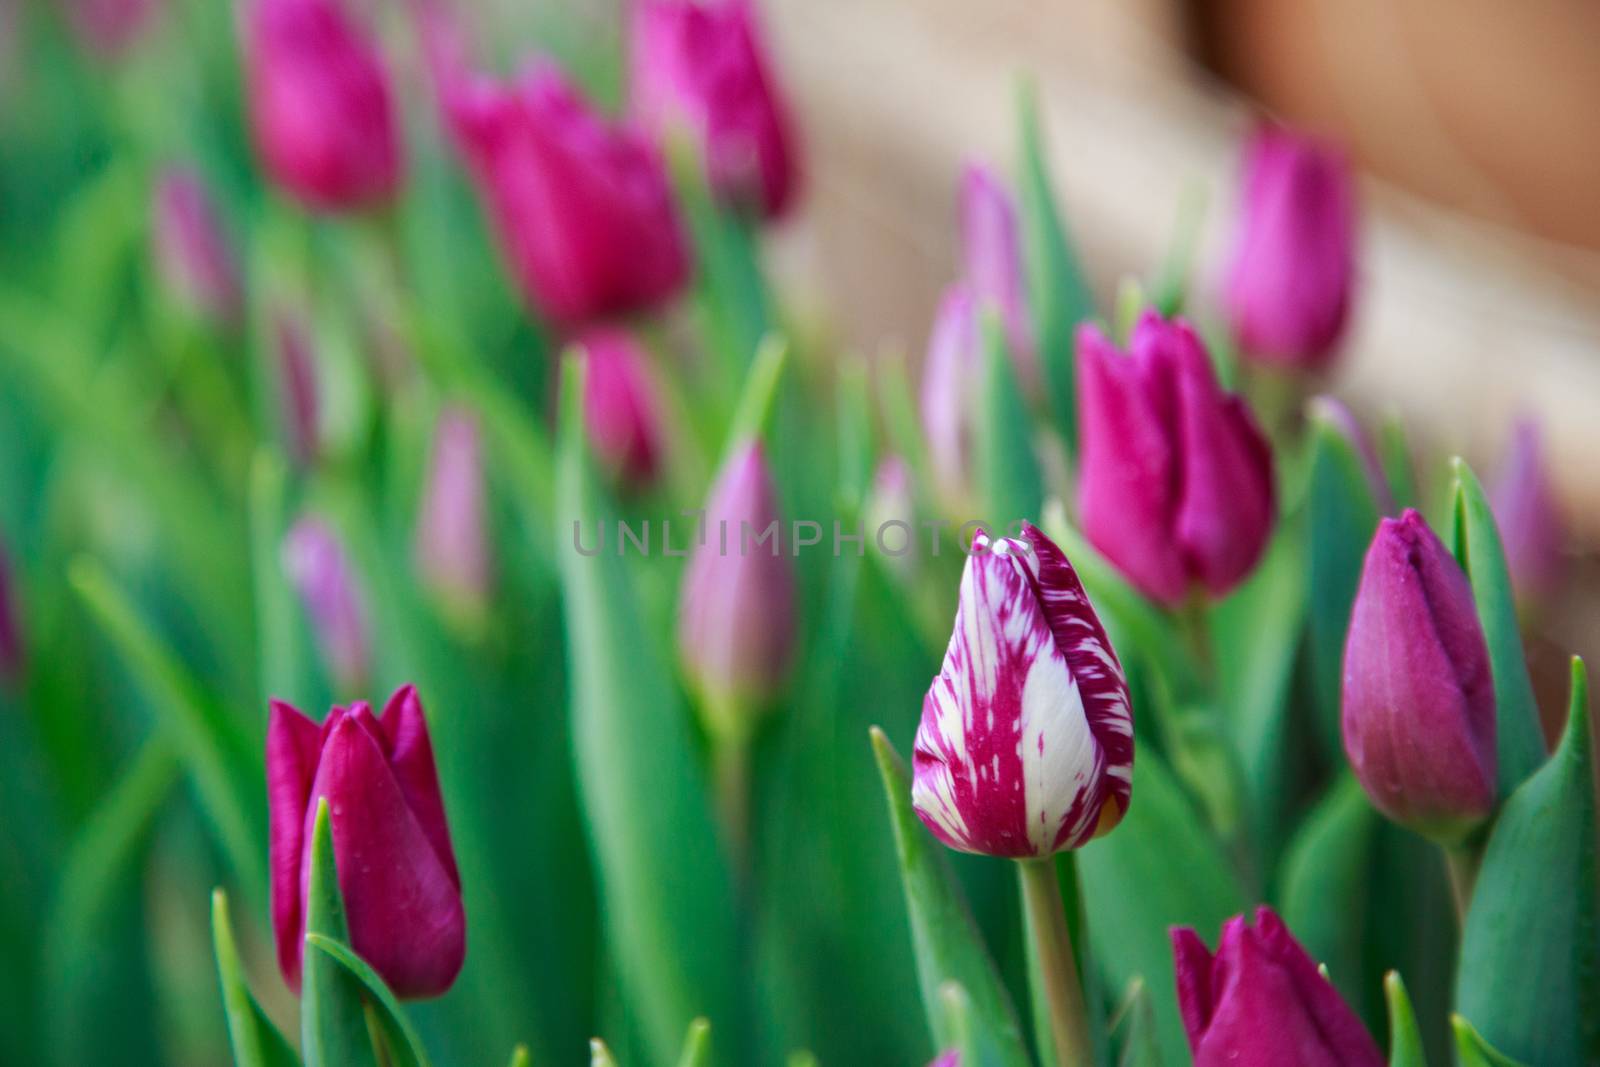 tulips by tadeush89